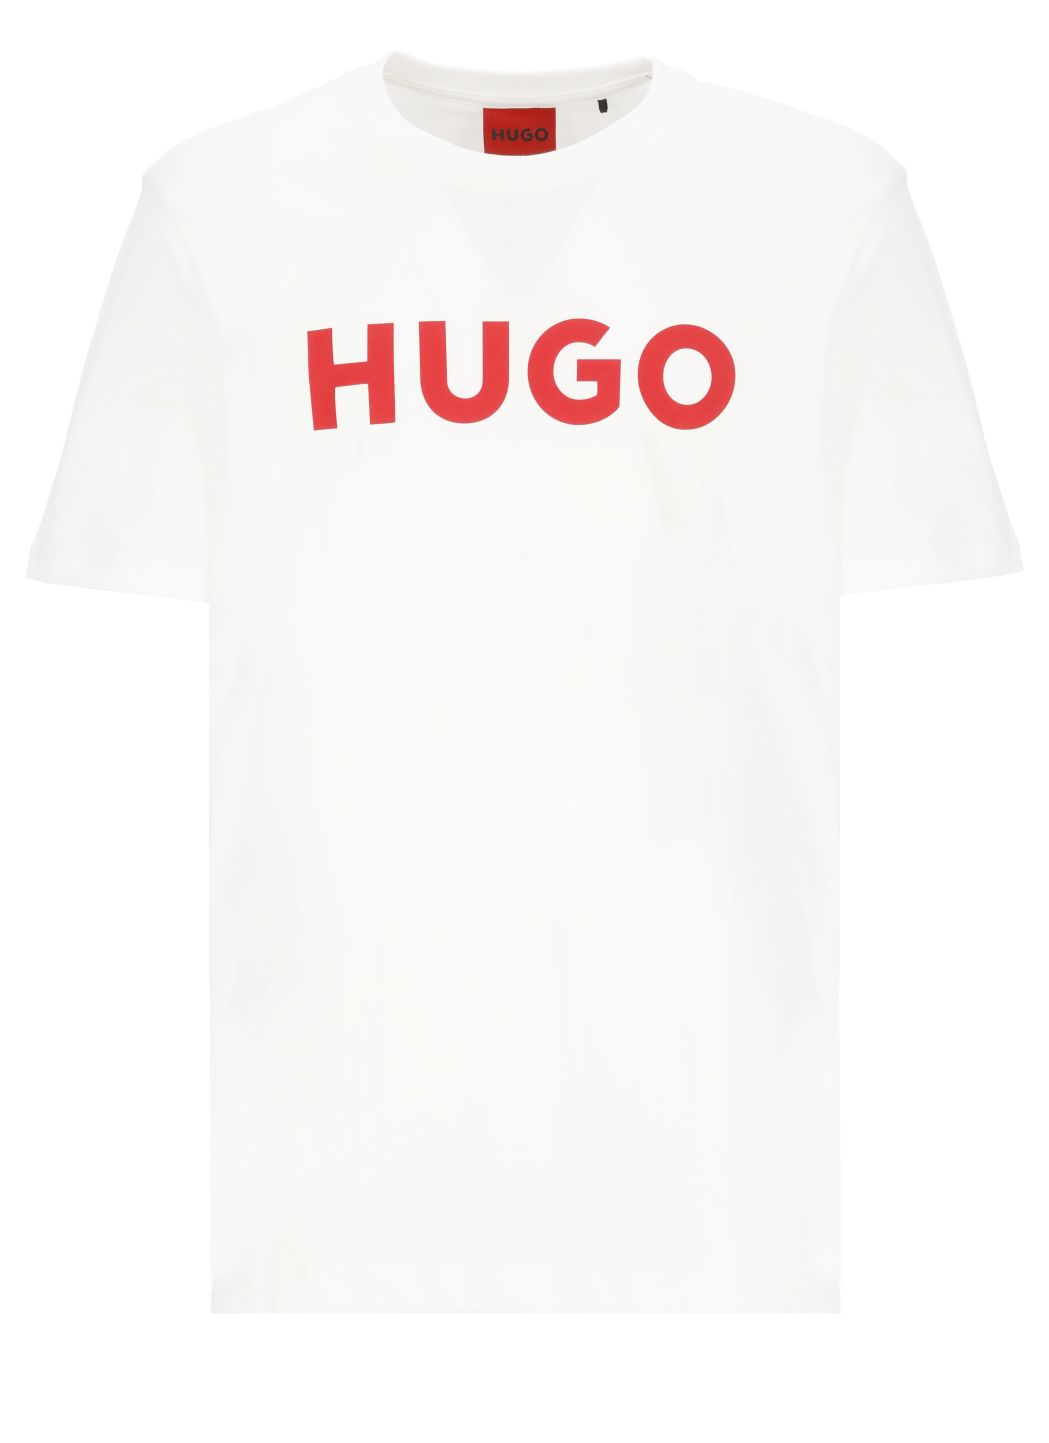 T-shirt Dulivio